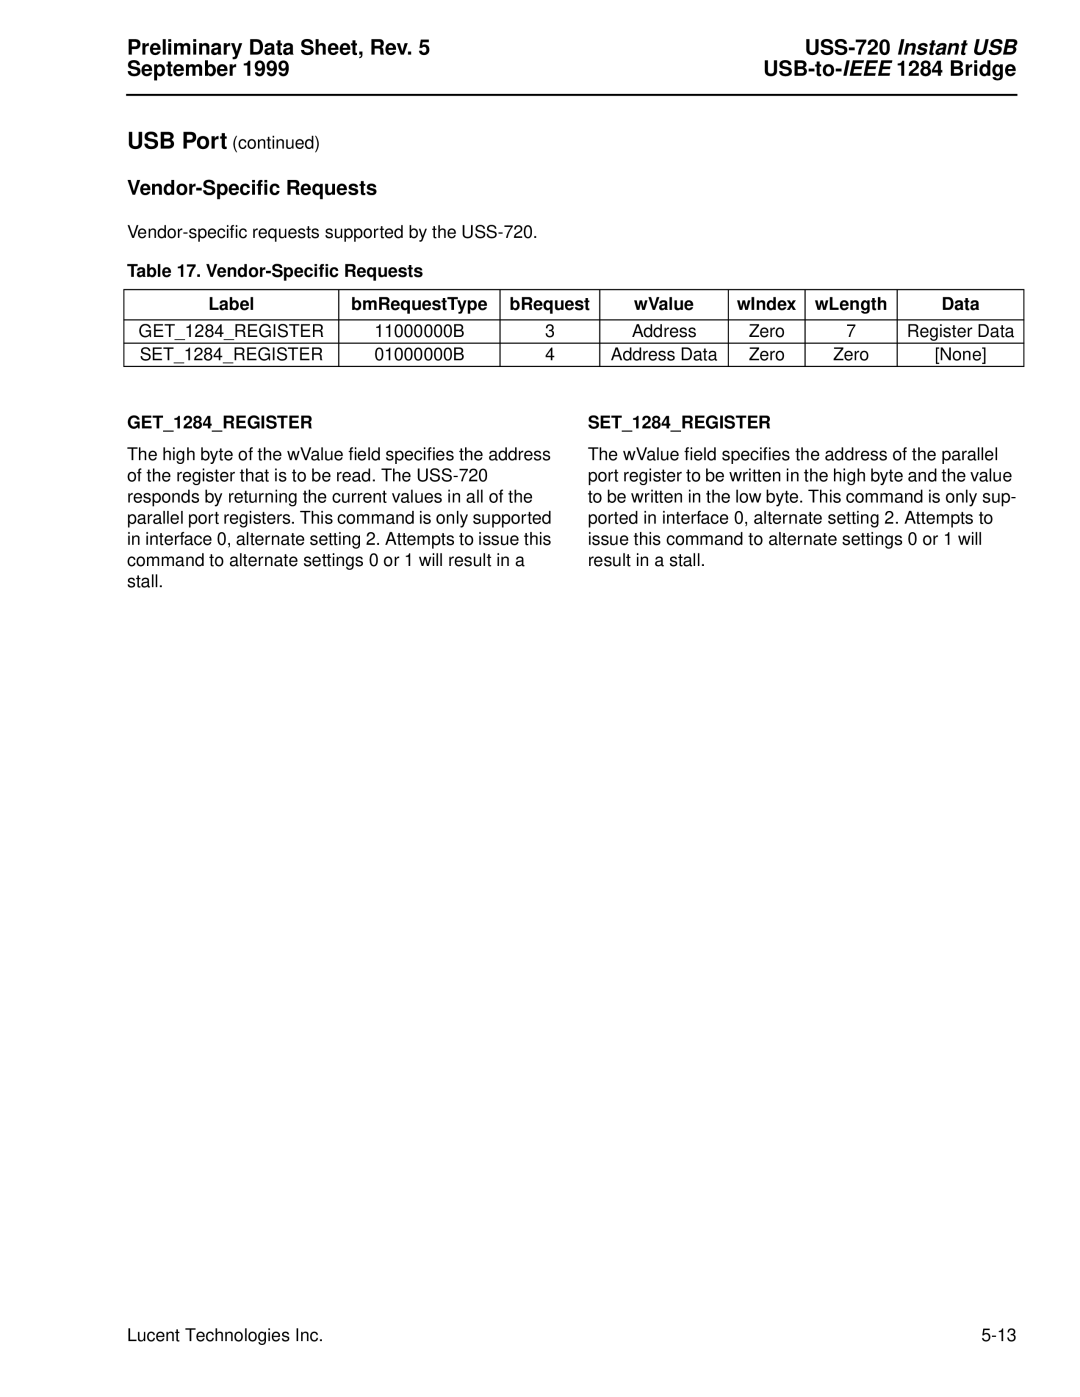 Lucent Technologies USS-720 manual Vendor-Speciﬁc Requests, Preliminary Data Sheet, Rev, Instant USB, September, Bridge 